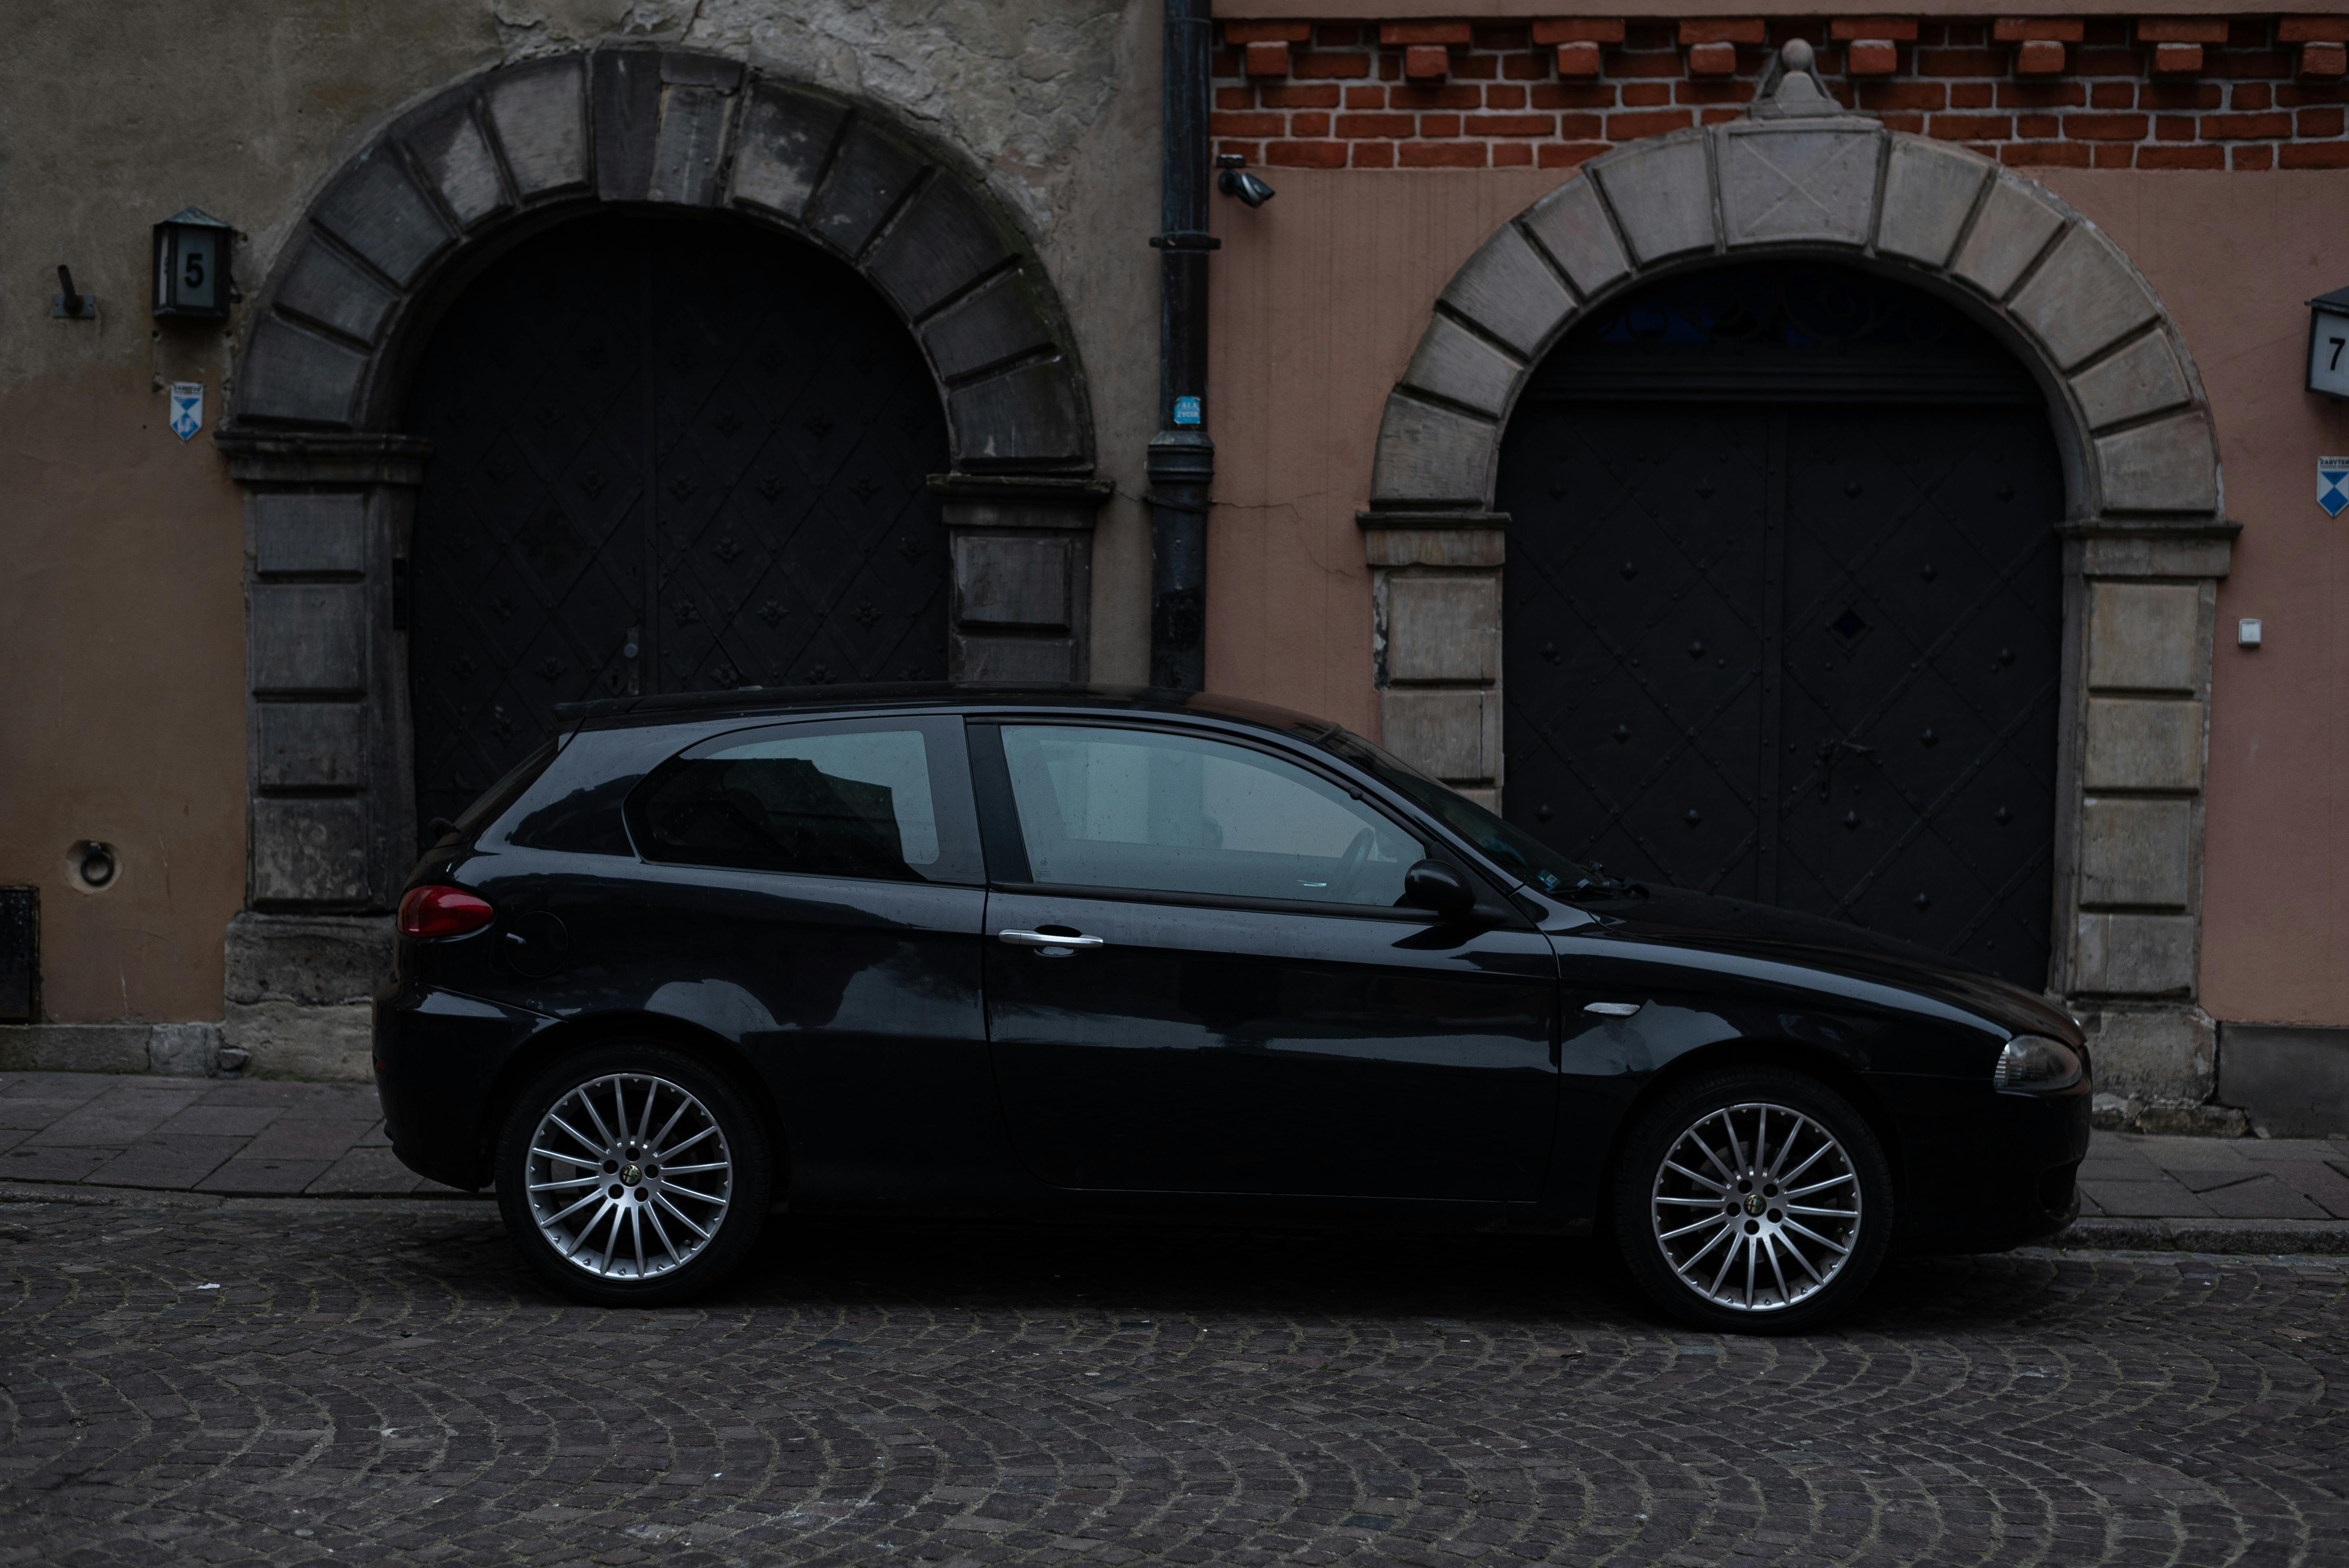 𝗕𝗲𝗮𝘂𝘁𝘆 𝗼𝗳 𝘁𝗵𝗲 𝘄𝗲𝗱𝗱𝗶𝗻𝗴! 💍😍 Alfa Romeo 147 ❤️⚕️  Owner:@maliszkaa • • #Alfa #Romeo #147 #AlfaRomeo #Alfa147 #sky #lights  #low #lowcar #black…